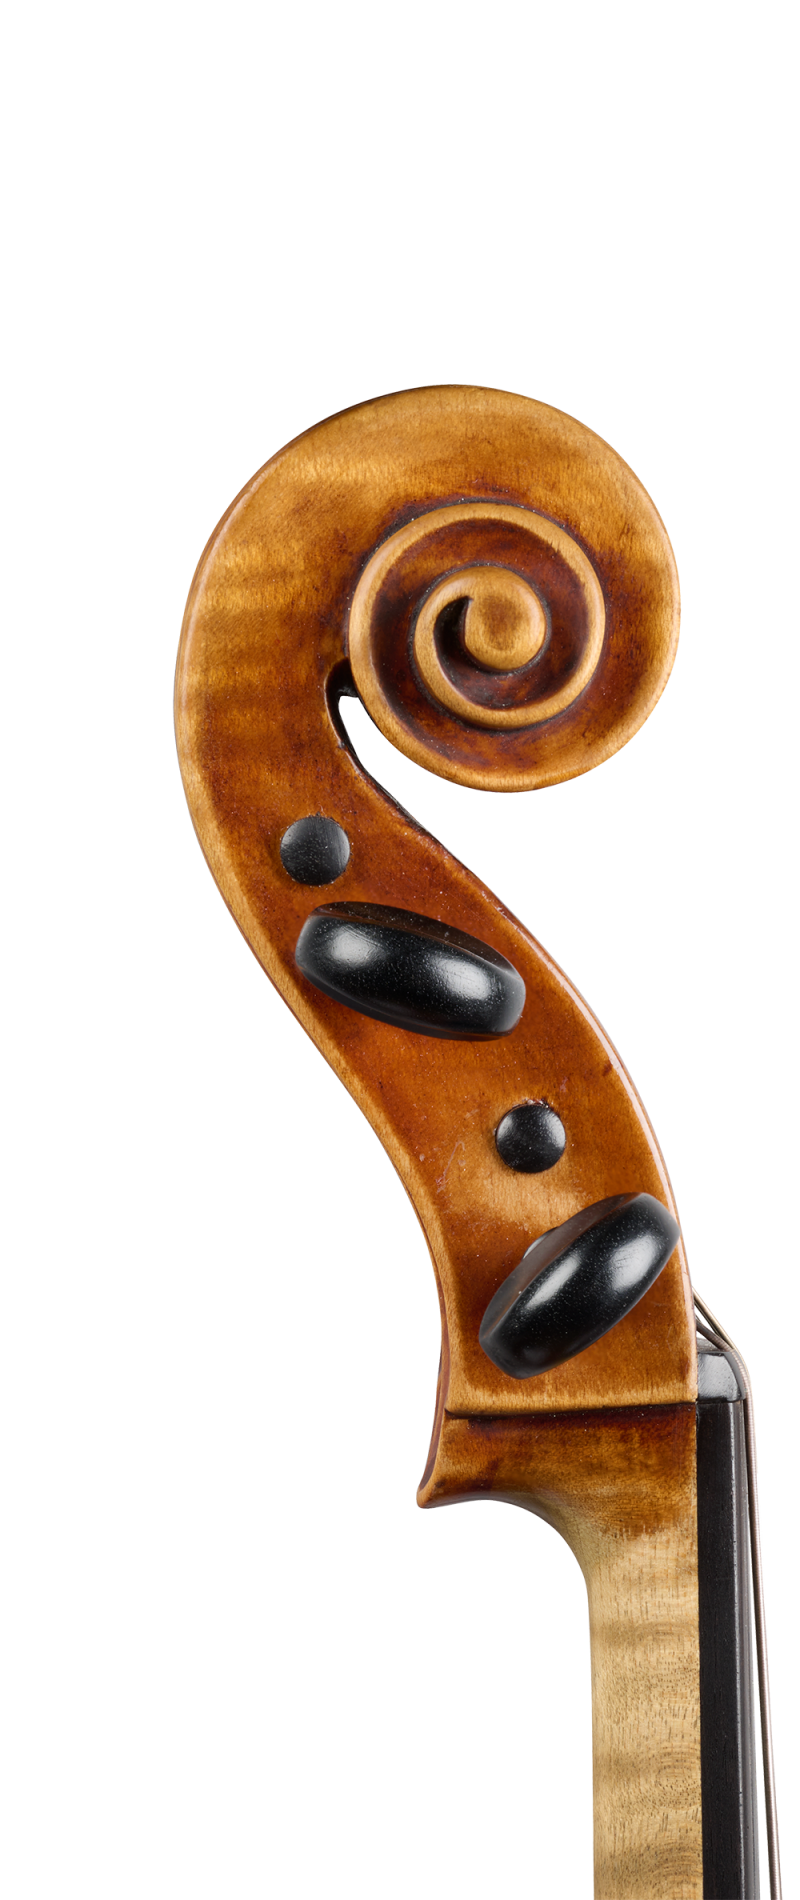 Scroll of a viola by Gaetano Sgarabotto, Parma, circa 1930